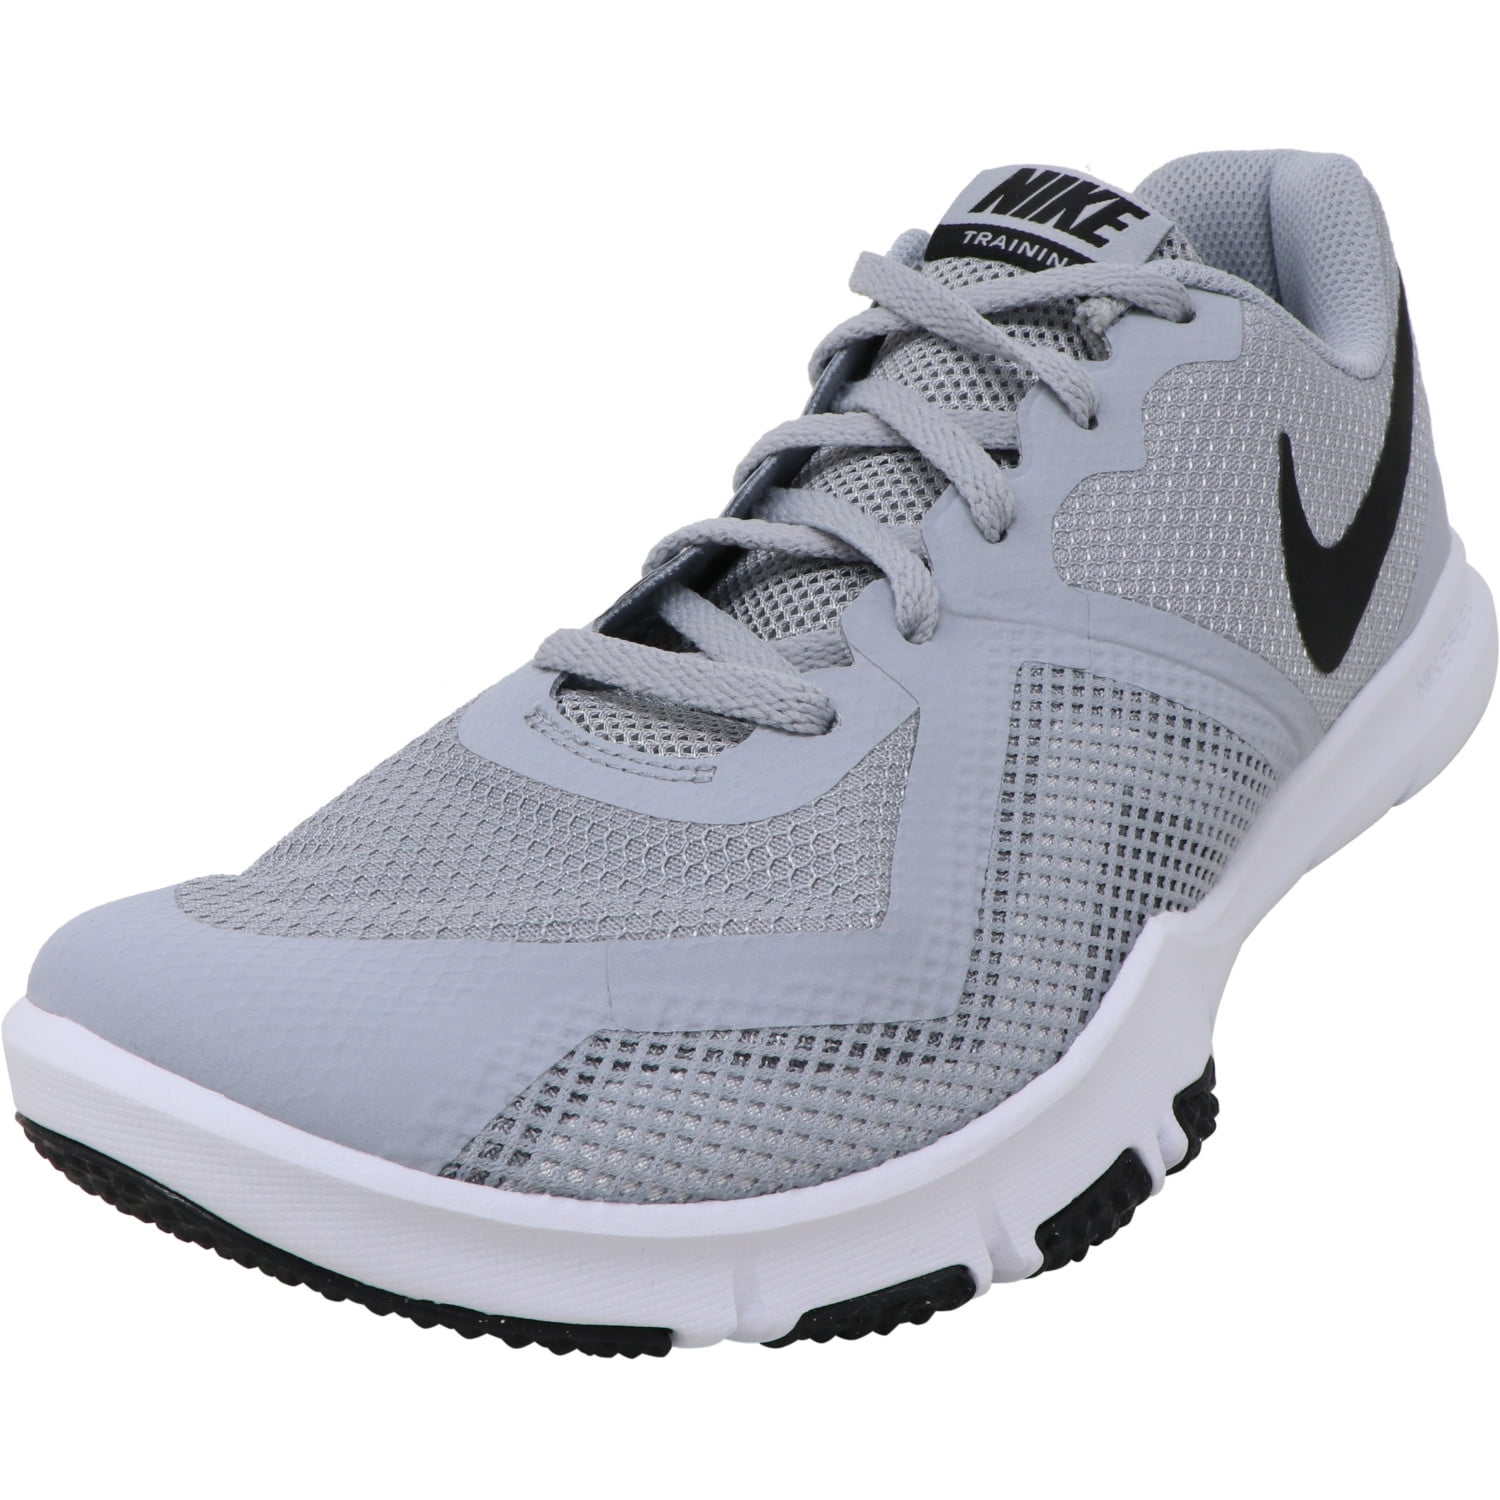 Nike Control Ii Wolf Grey / Black White Ankle-High Shoes 12M - Walmart.com